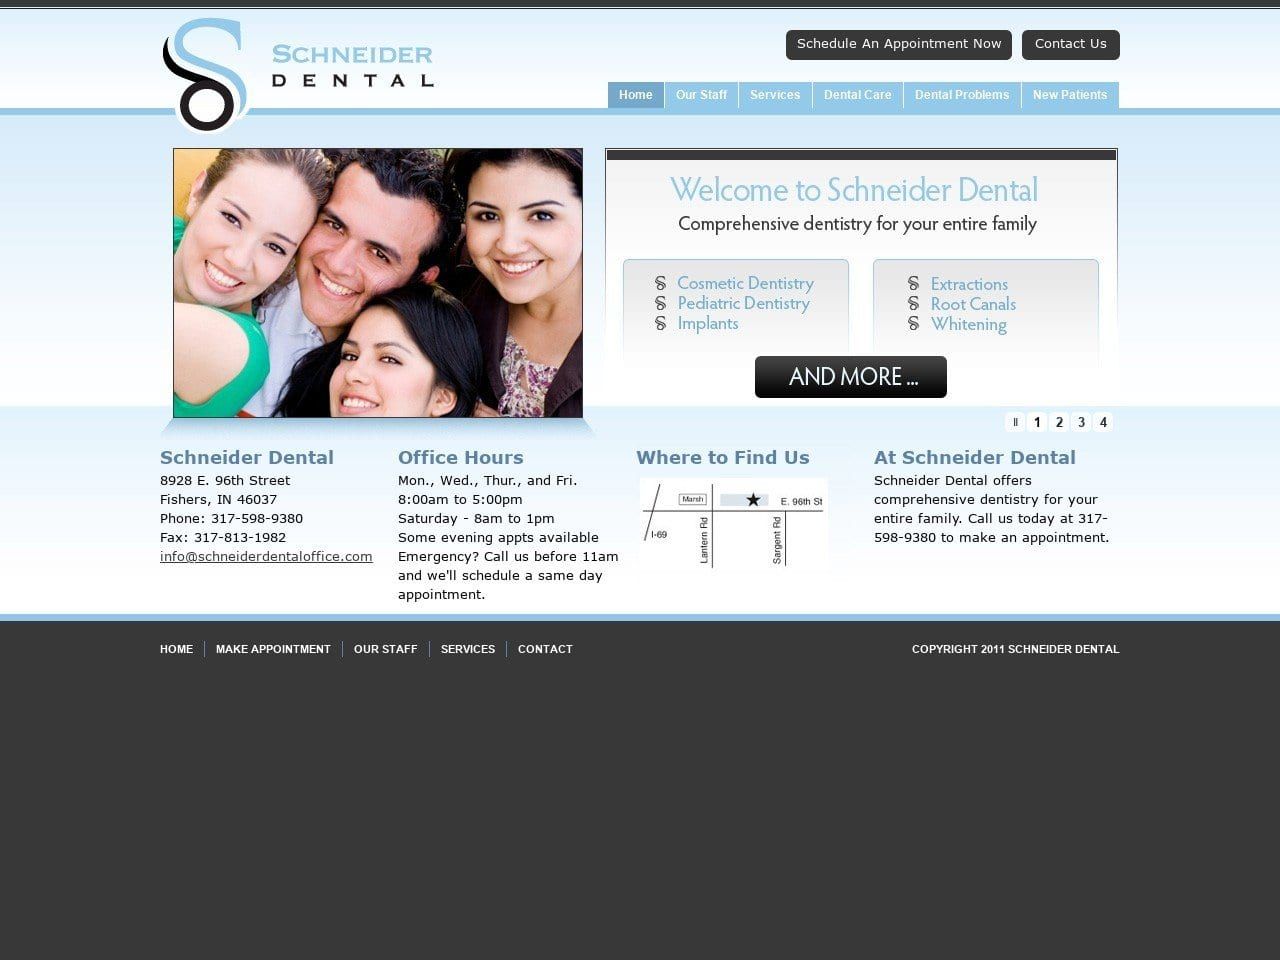 Schneider Dental Website Screenshot from schneiderdentaloffice.com